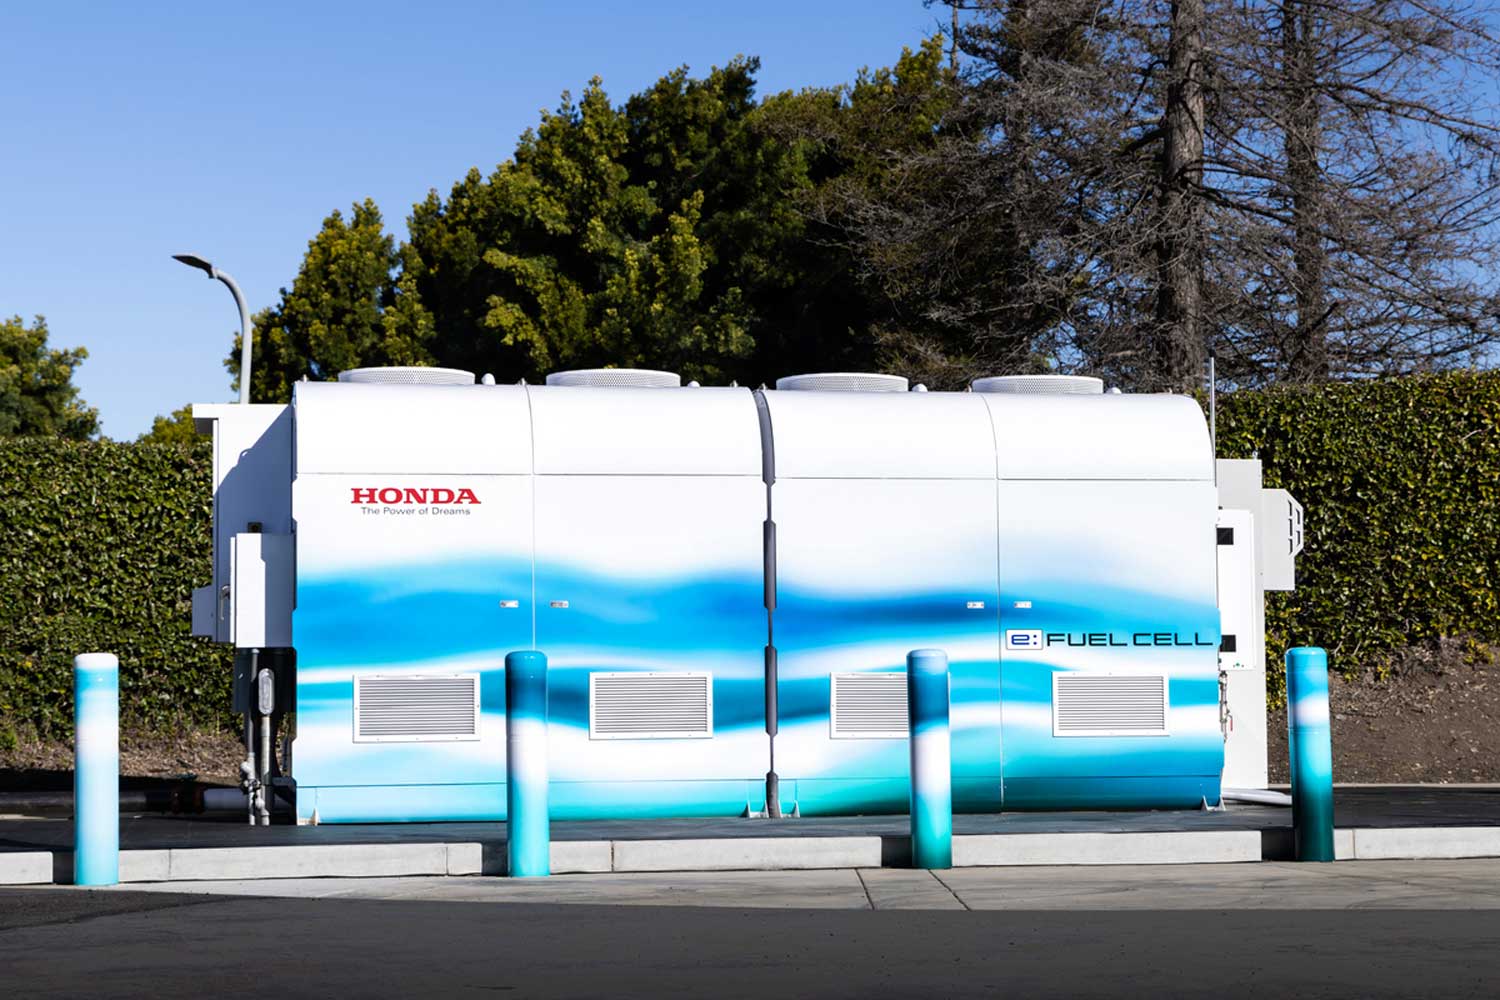 Honda fuel cell machine